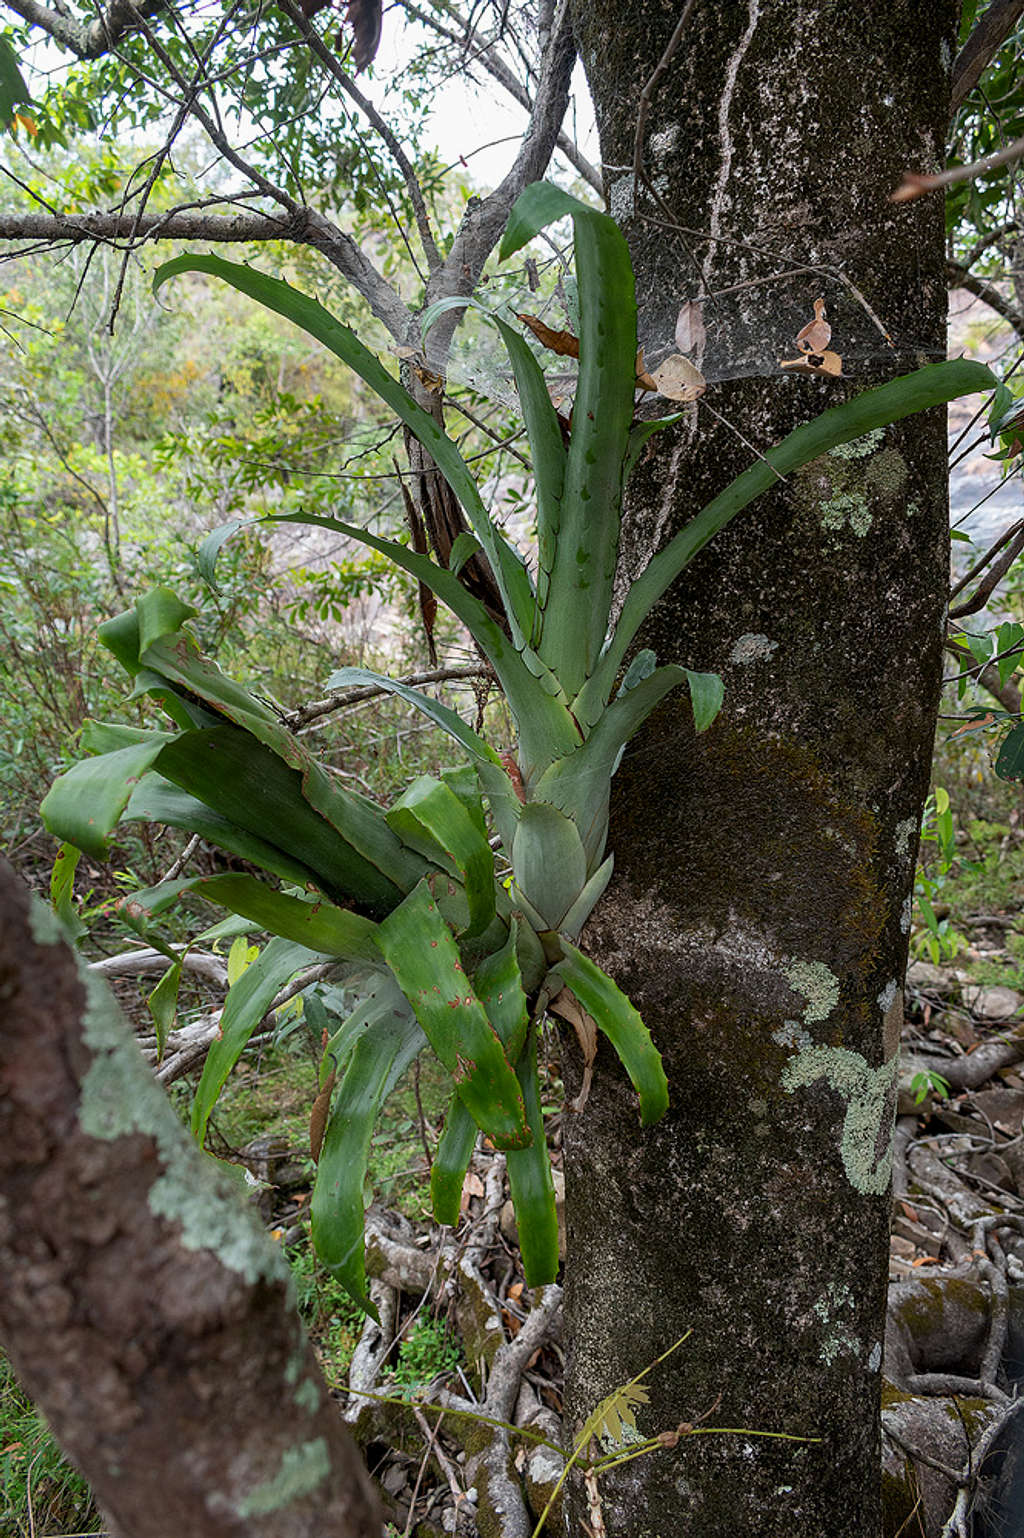 Aechmea bromeliifolia